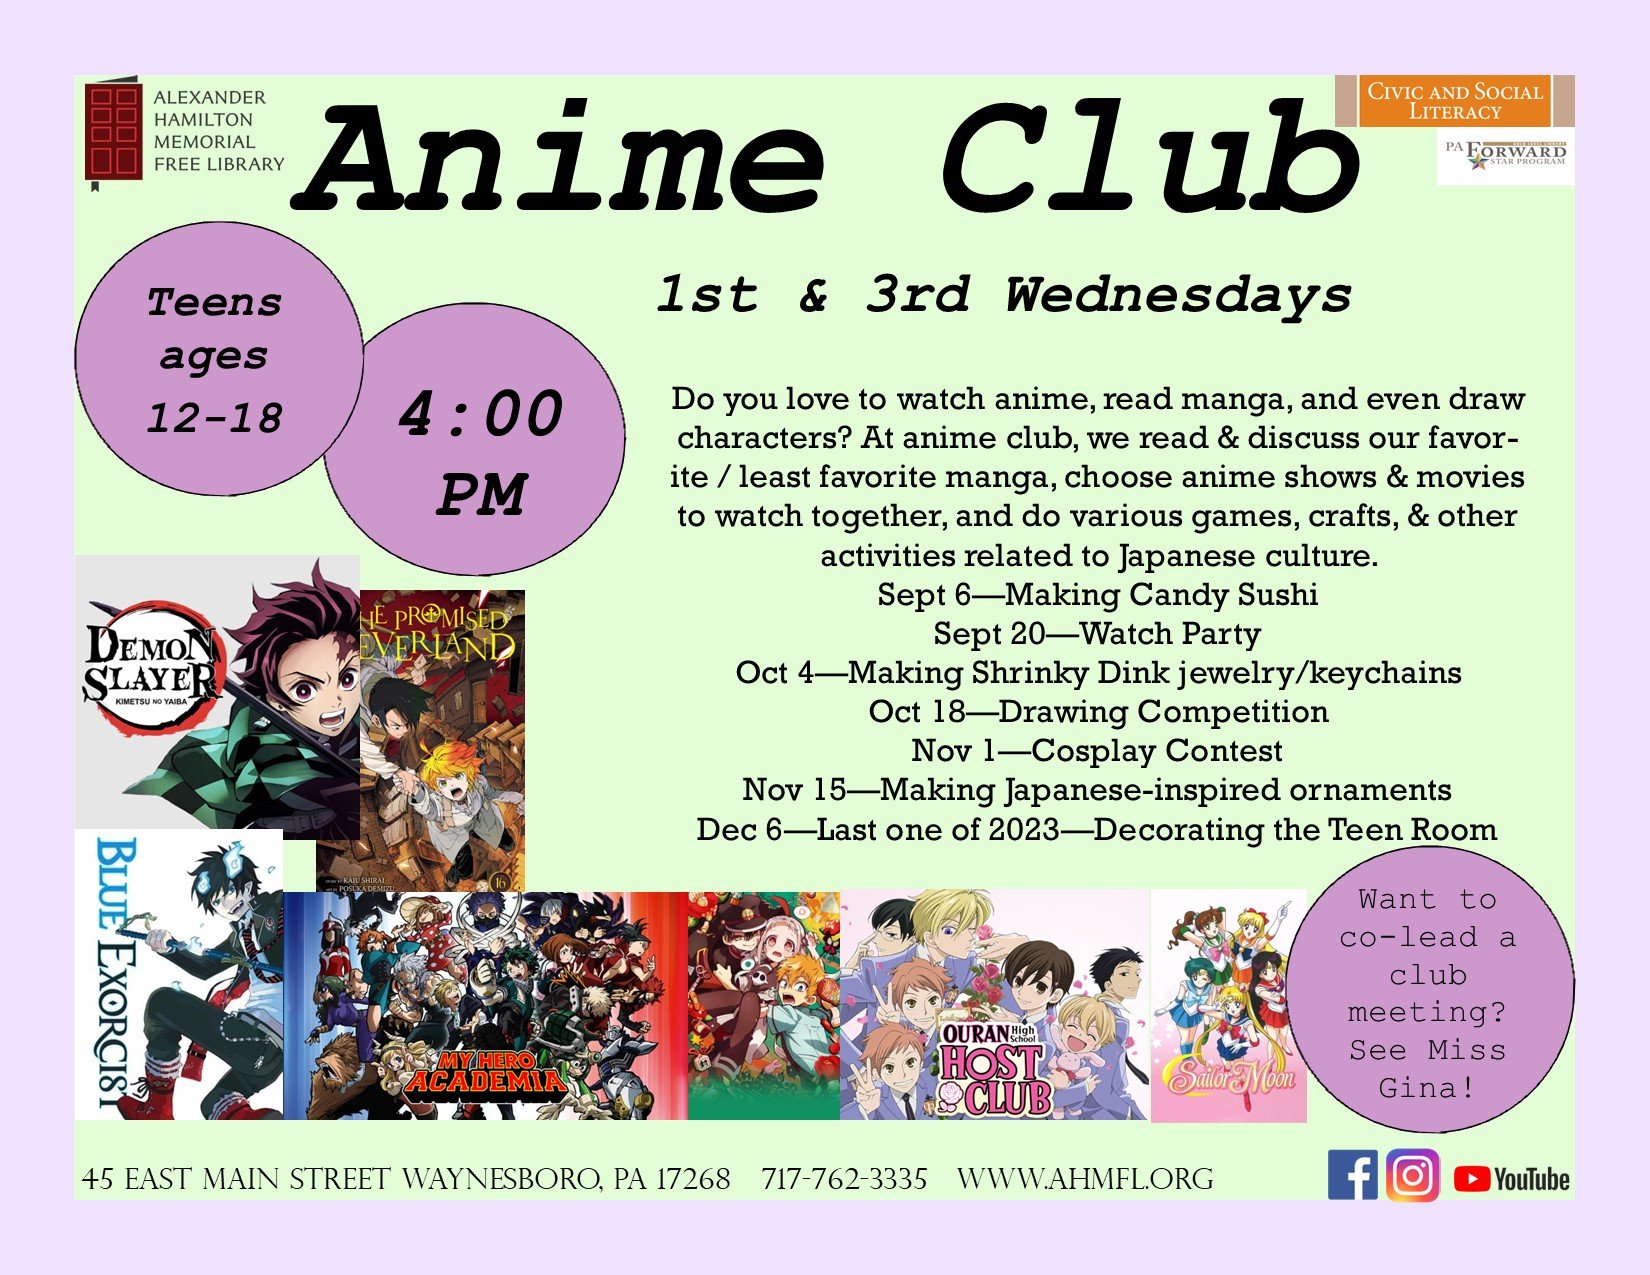 Anime Club — Alexander Hamilton Memorial Free Library